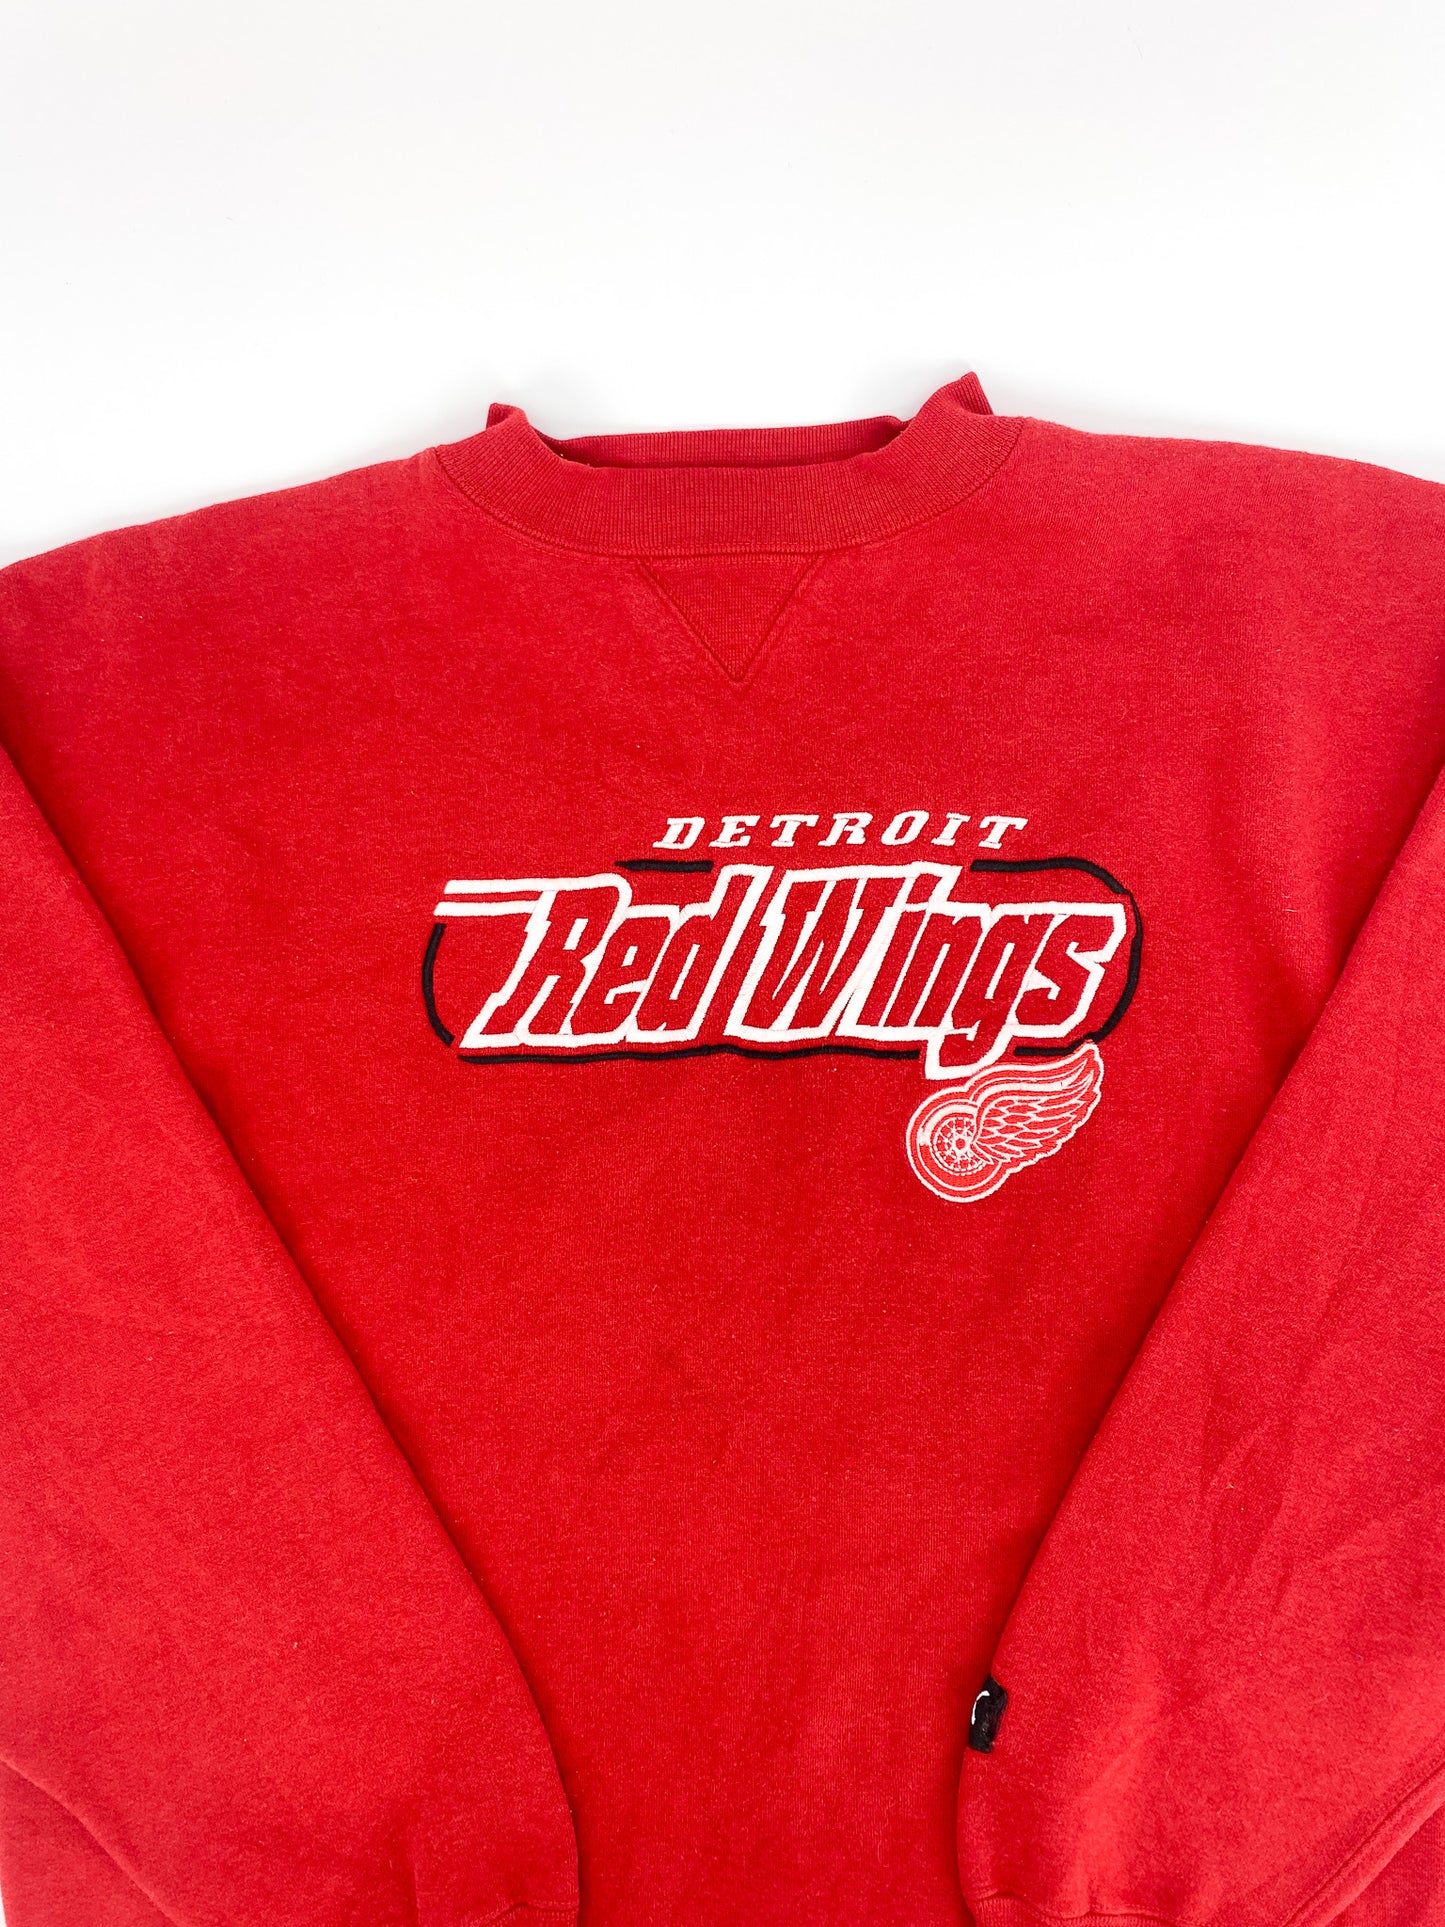 Vintage 90's Detroit Red Wings Jumper XL